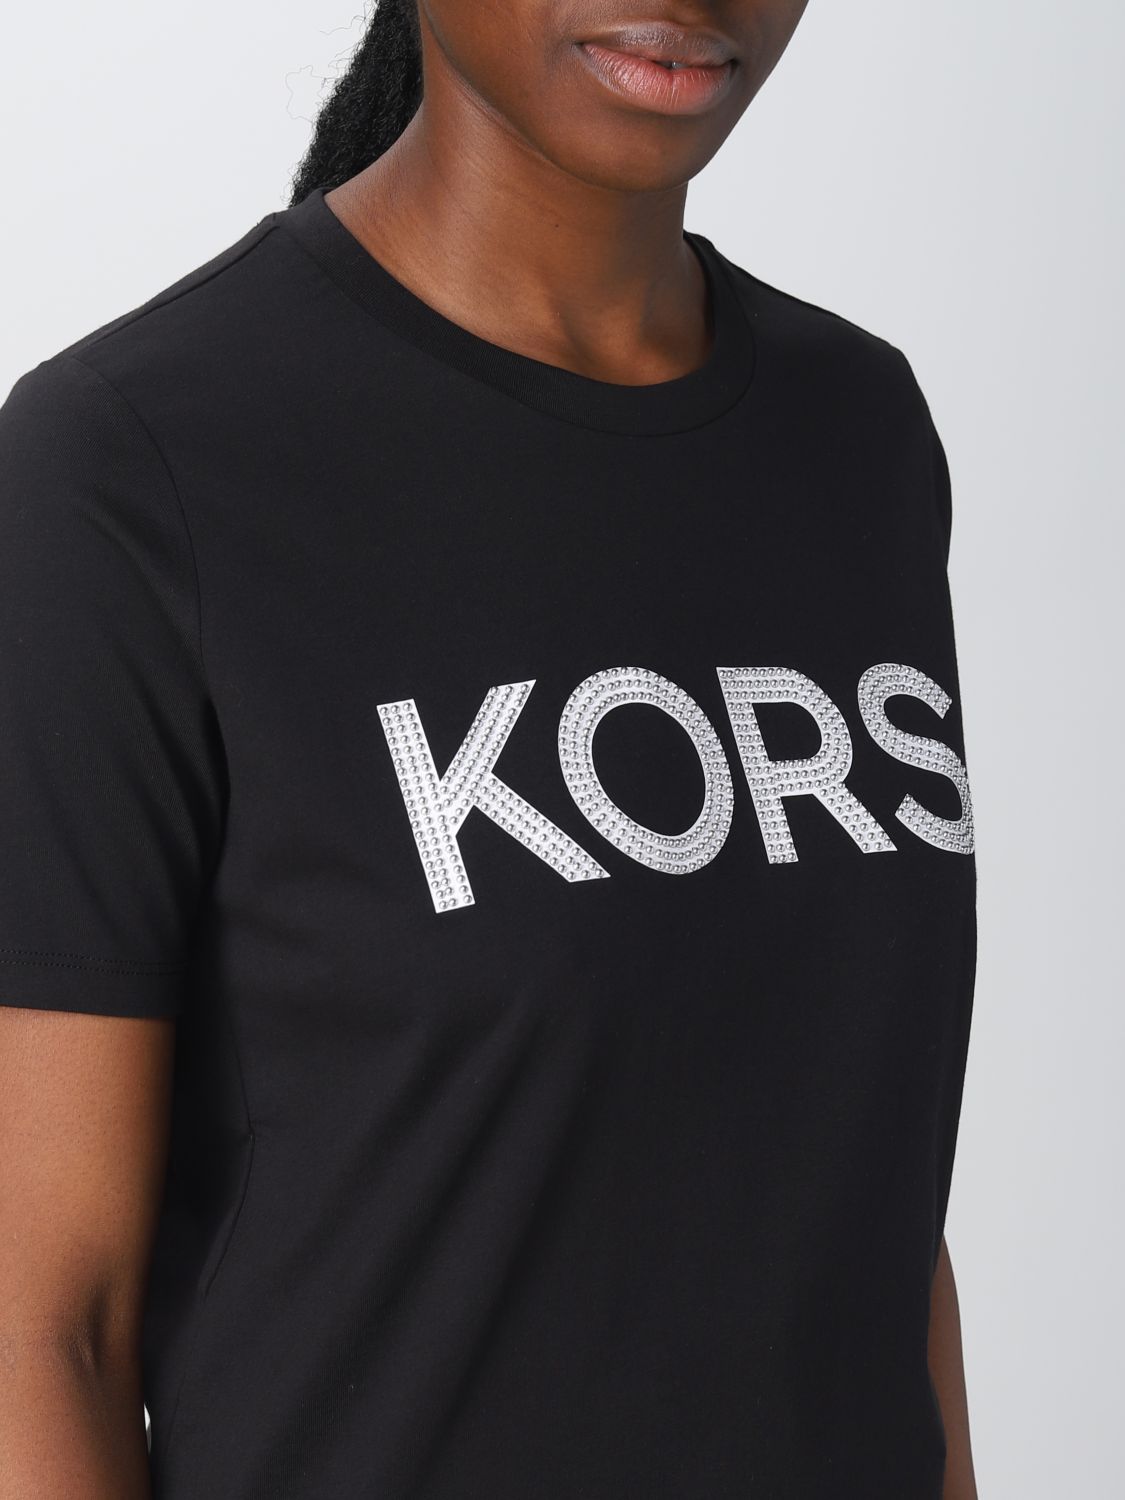 MICHAEL KORS: t-shirt for women - Black | Michael Kors t-shirt MB95MP197J  online on 